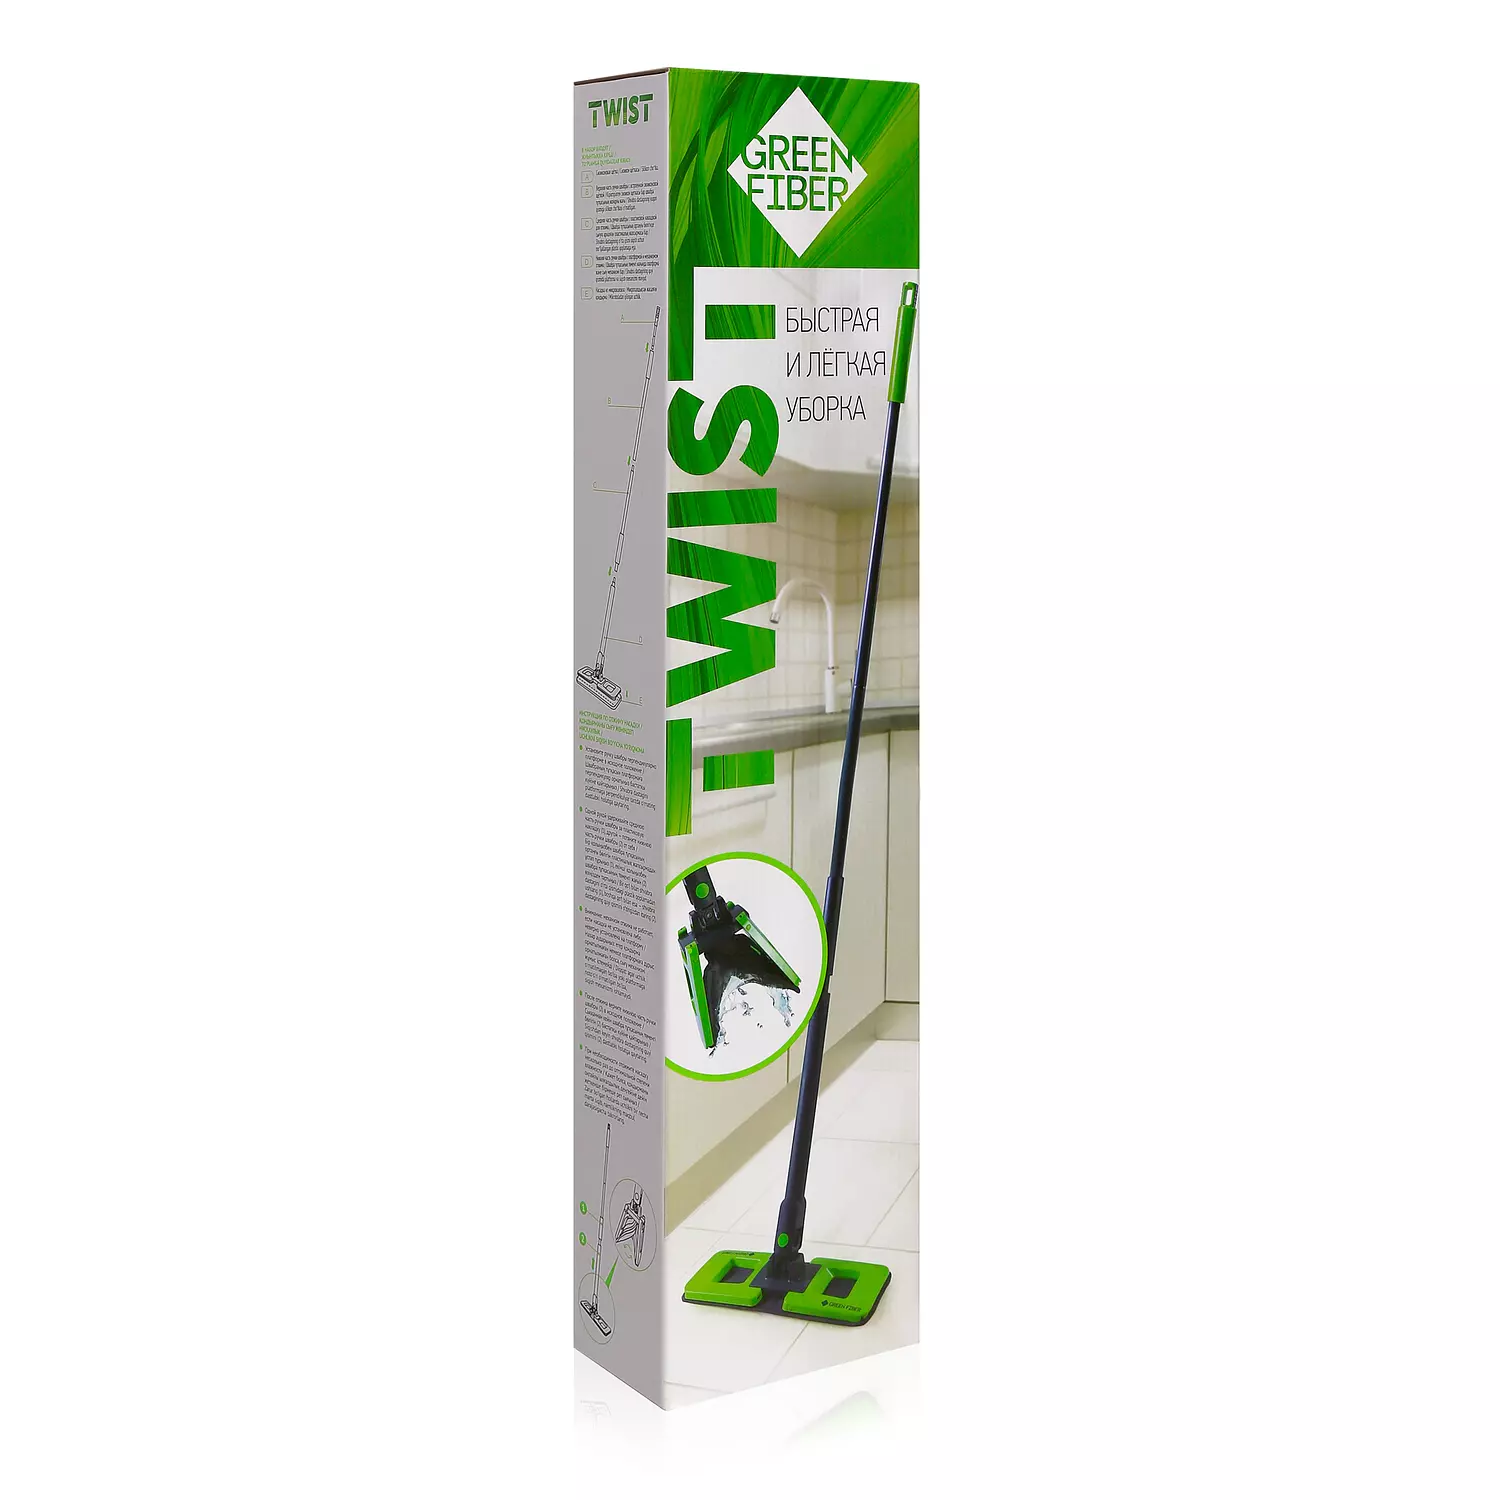 Green Fiber TWIST Squeeze Mop 4